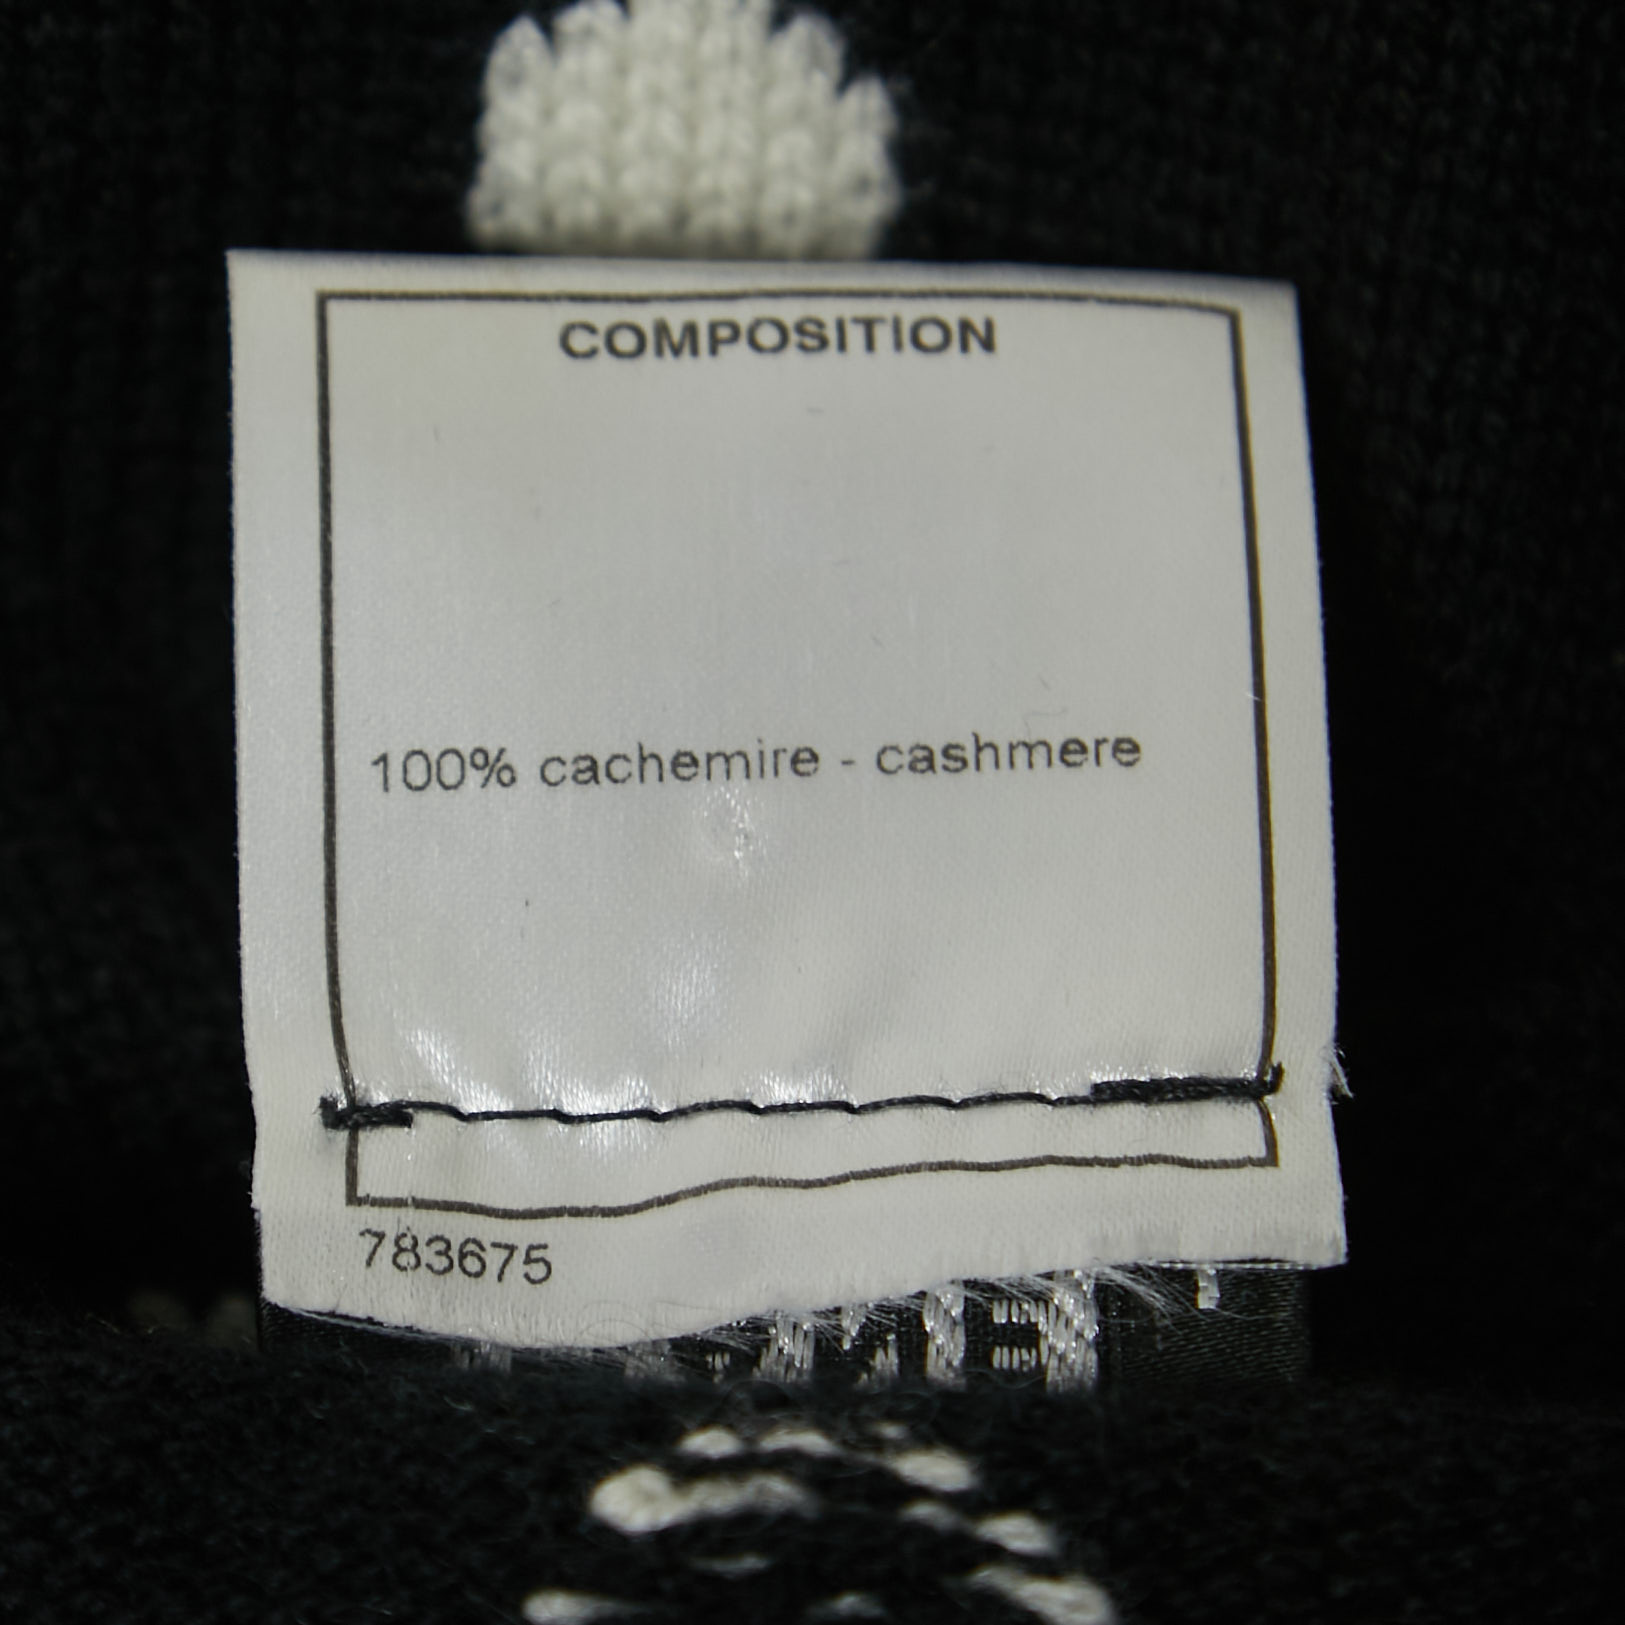 Chanel Black/White Polka Dot Cashmere Knit Top S